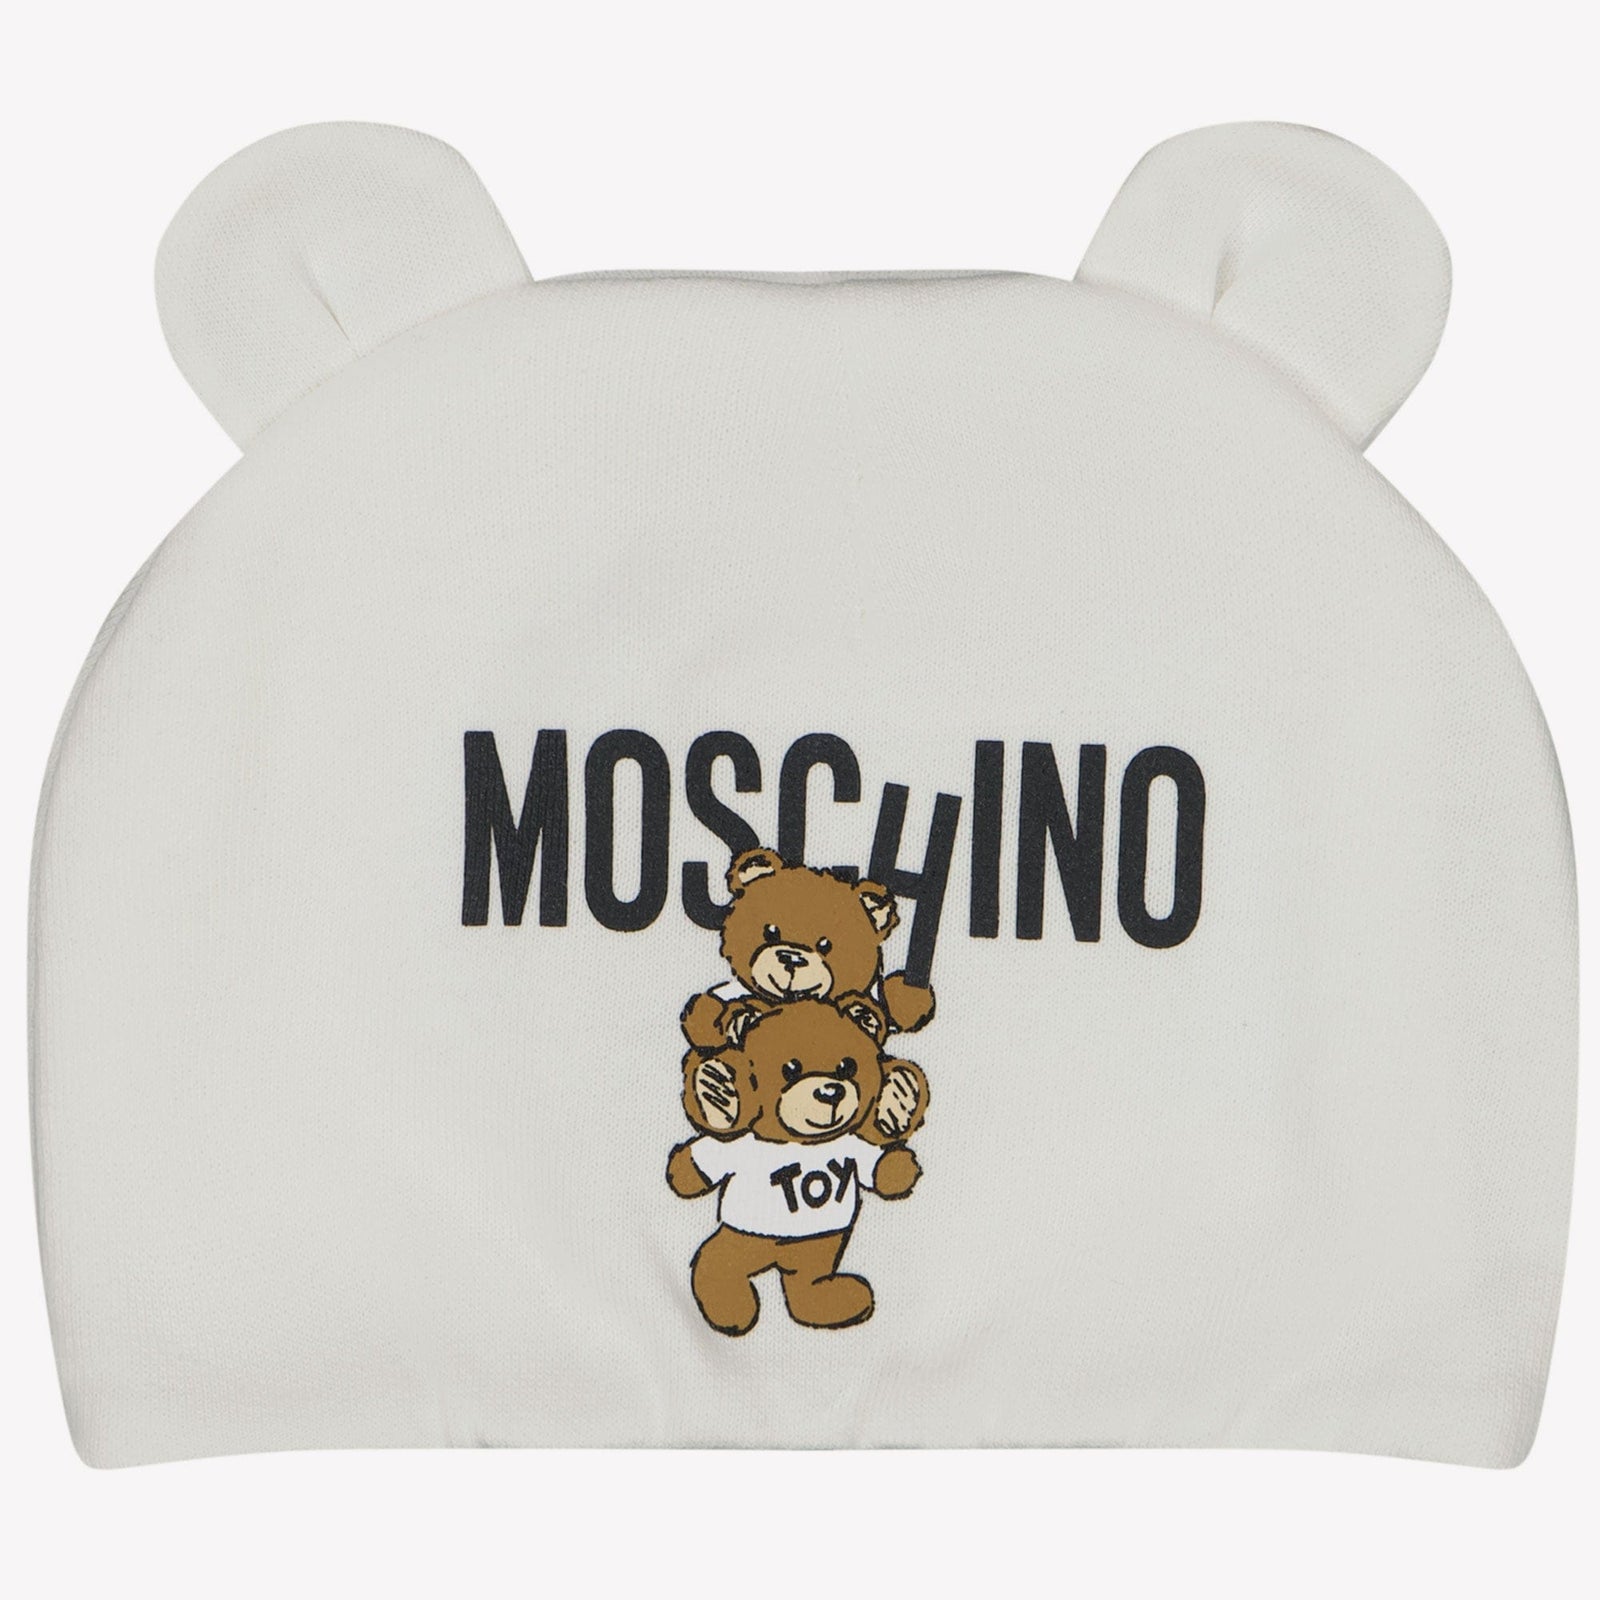 Moschino Baby unisex hatt av vit